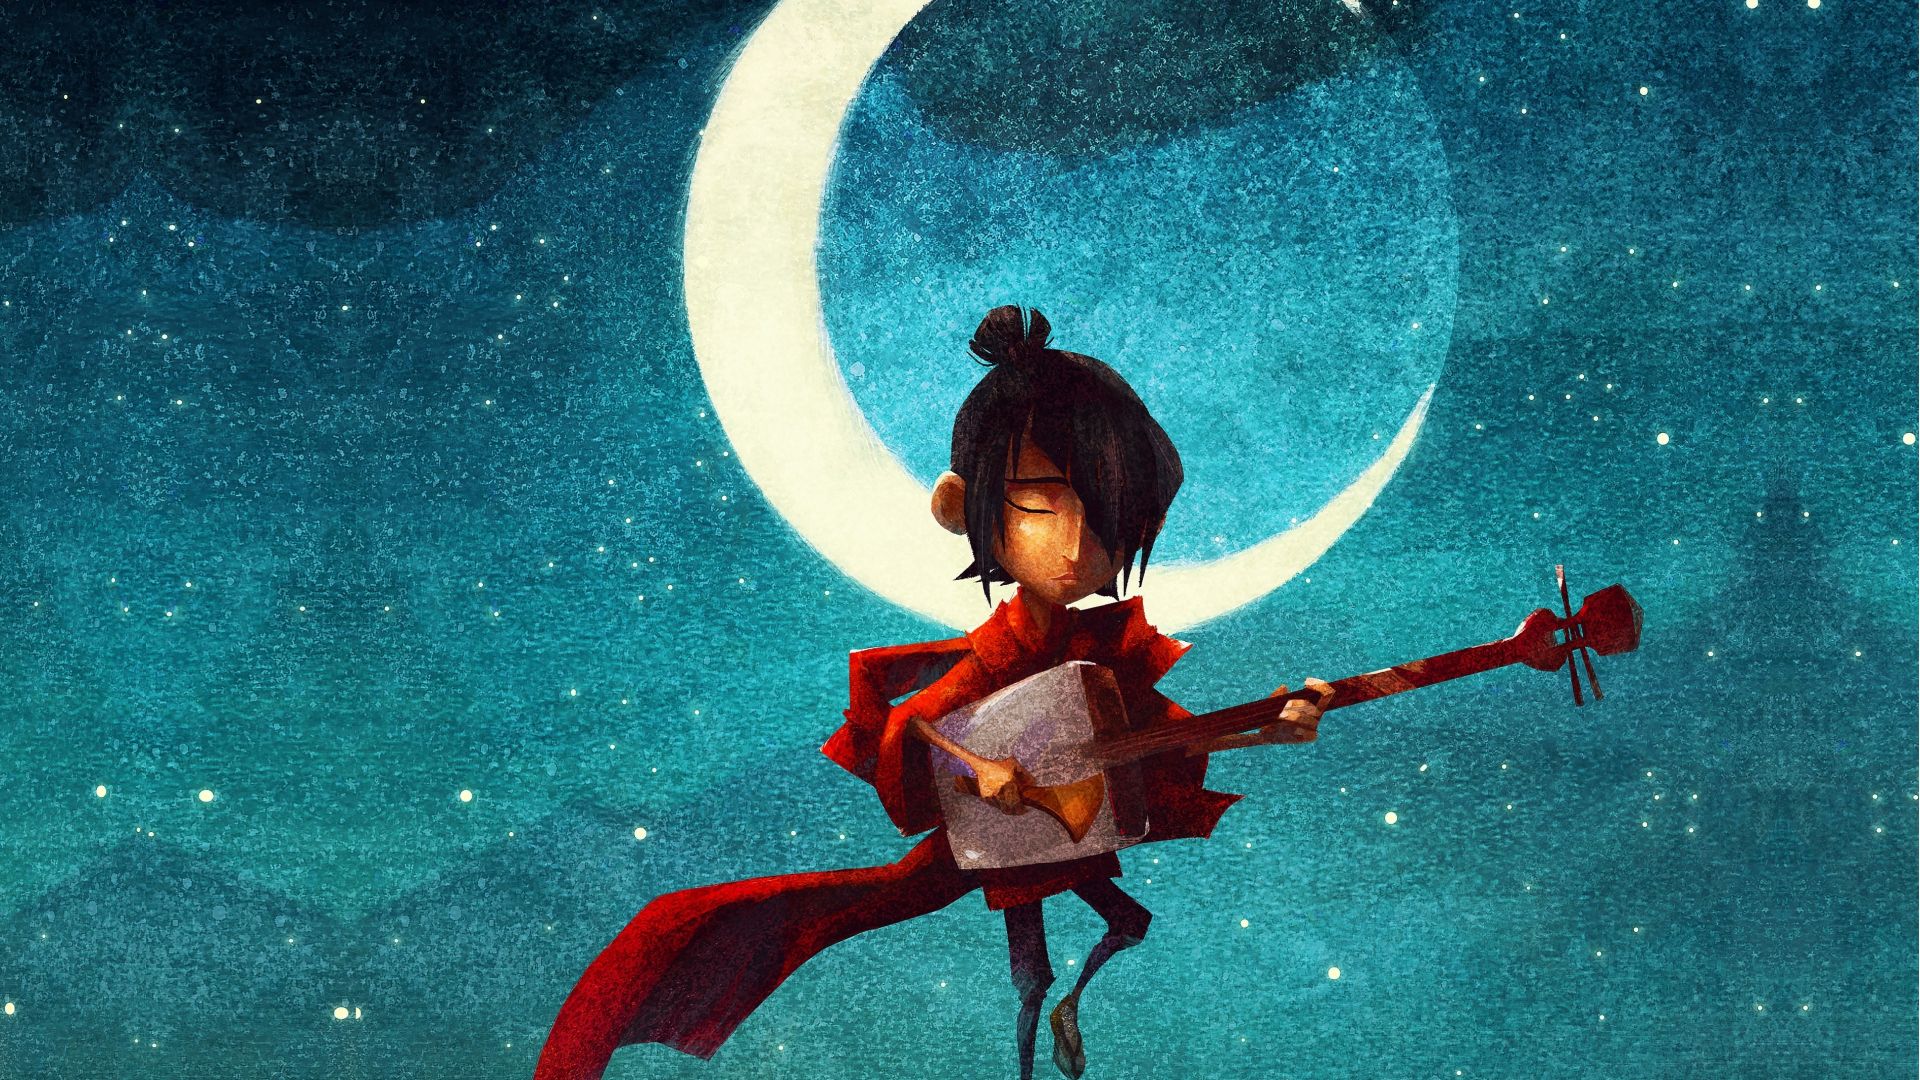 Кубо и две струны, легенда о самурае, лучшие мультфильмы 2016, Kubo and the Two Strings, Best Animation Movies of 2016 (horizontal)